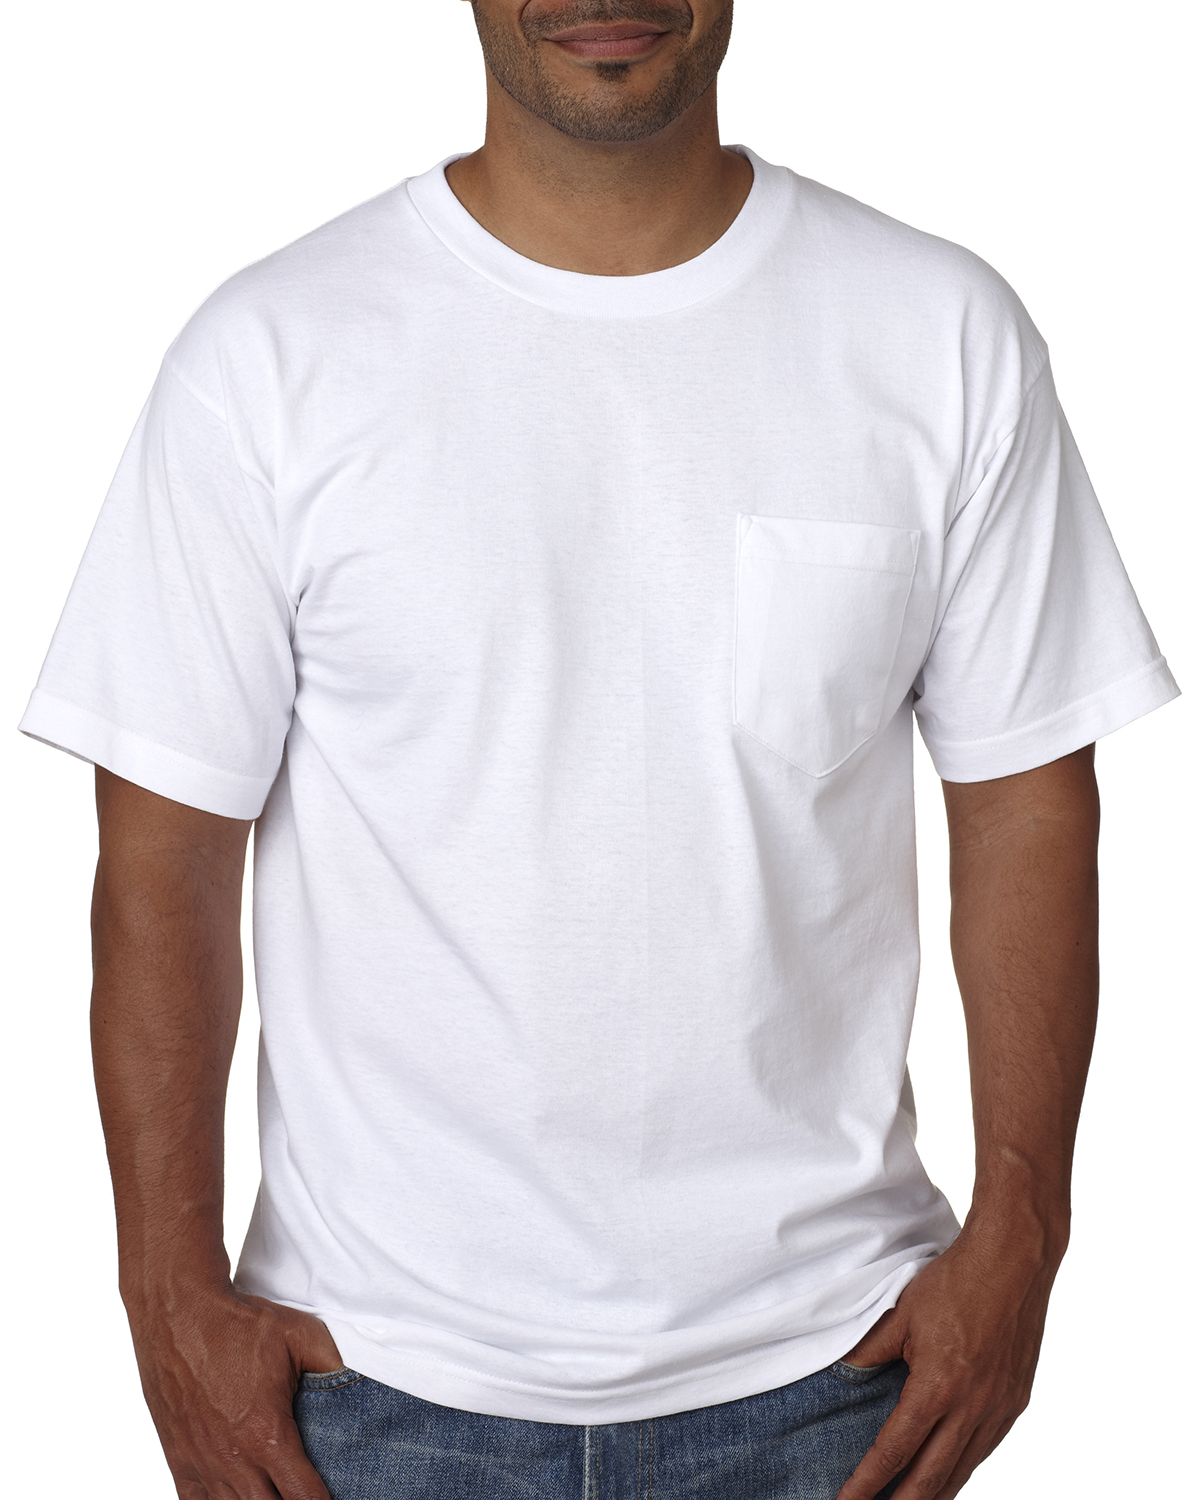 BA5070 Bayside Adult Short-Sleeve T-Shirt with Pocket